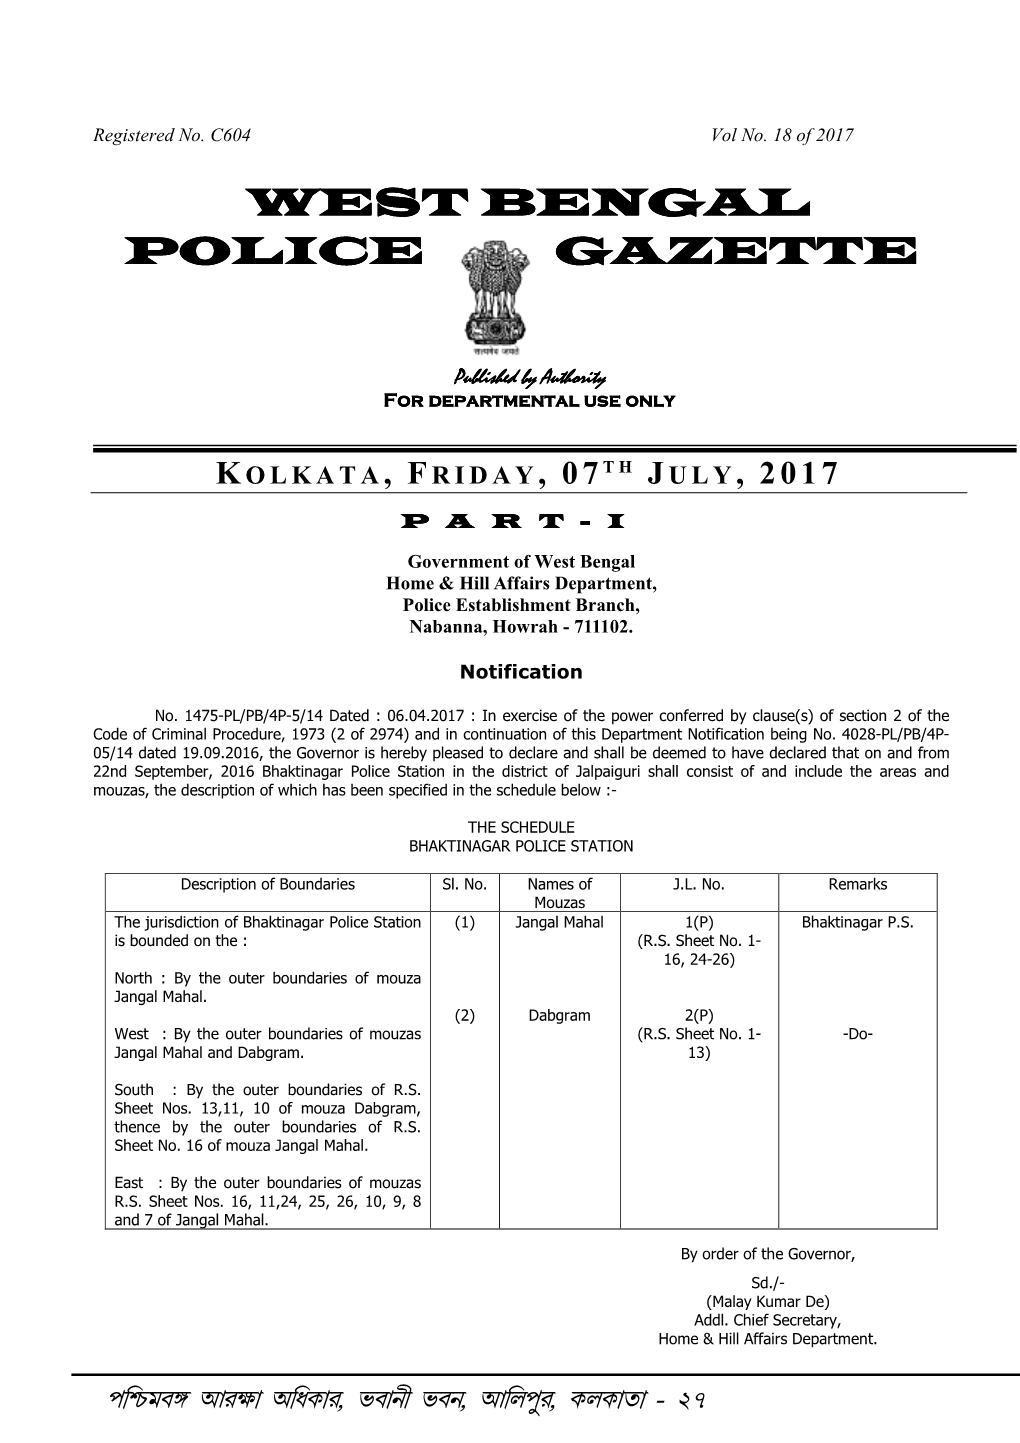 West Bengal Police Gazette Police Gazette Police